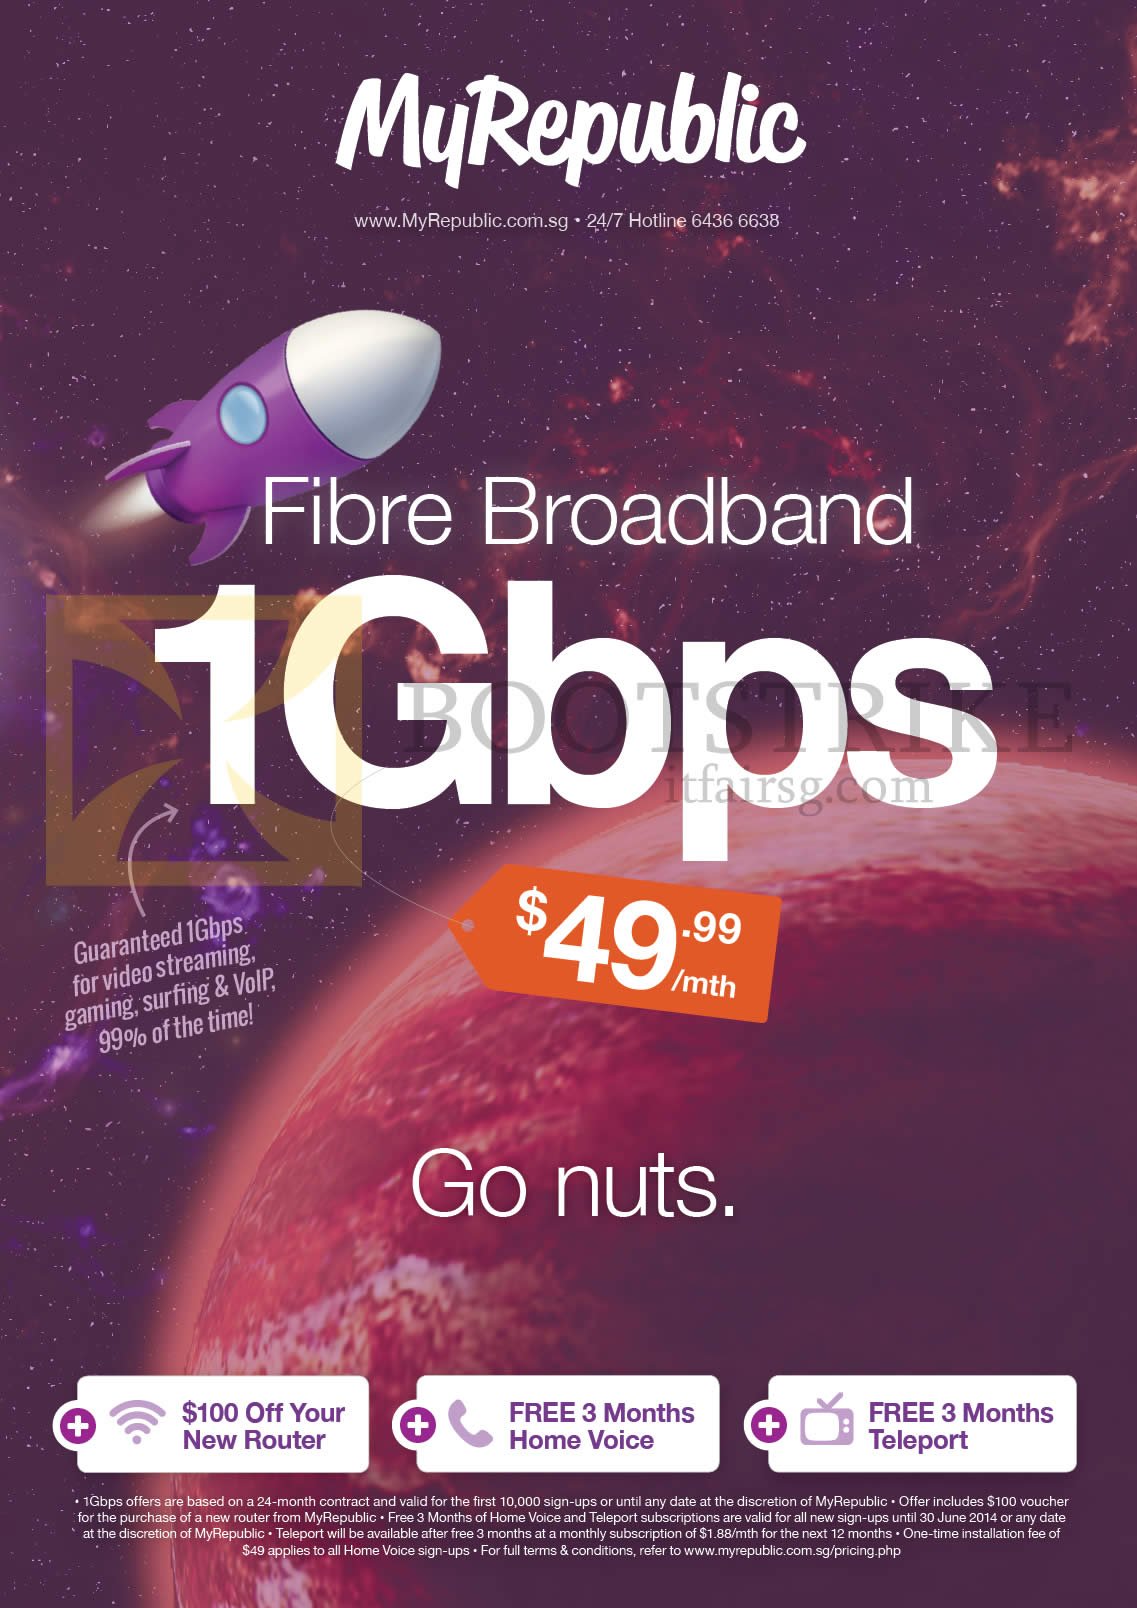 PC SHOW 2014 price list image brochure of MyRepublic Fibre Broadband 1Gbps 49.99